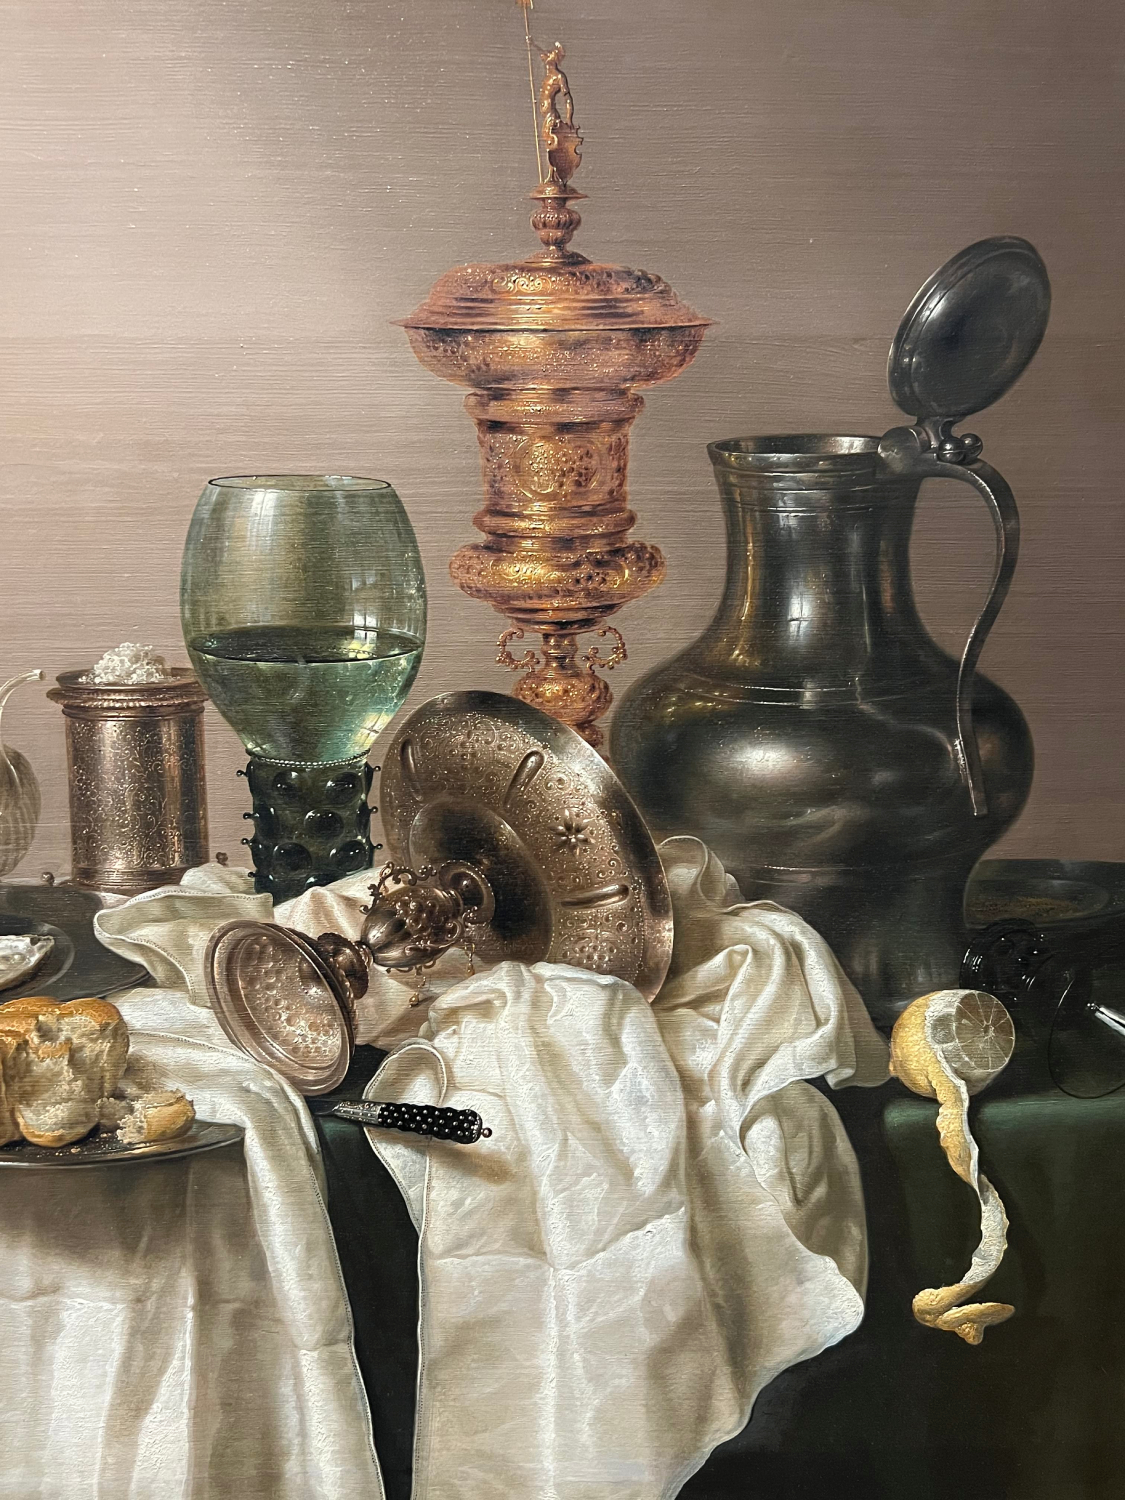 Willem Claesz Heda's Still Life with a Gilt Cup